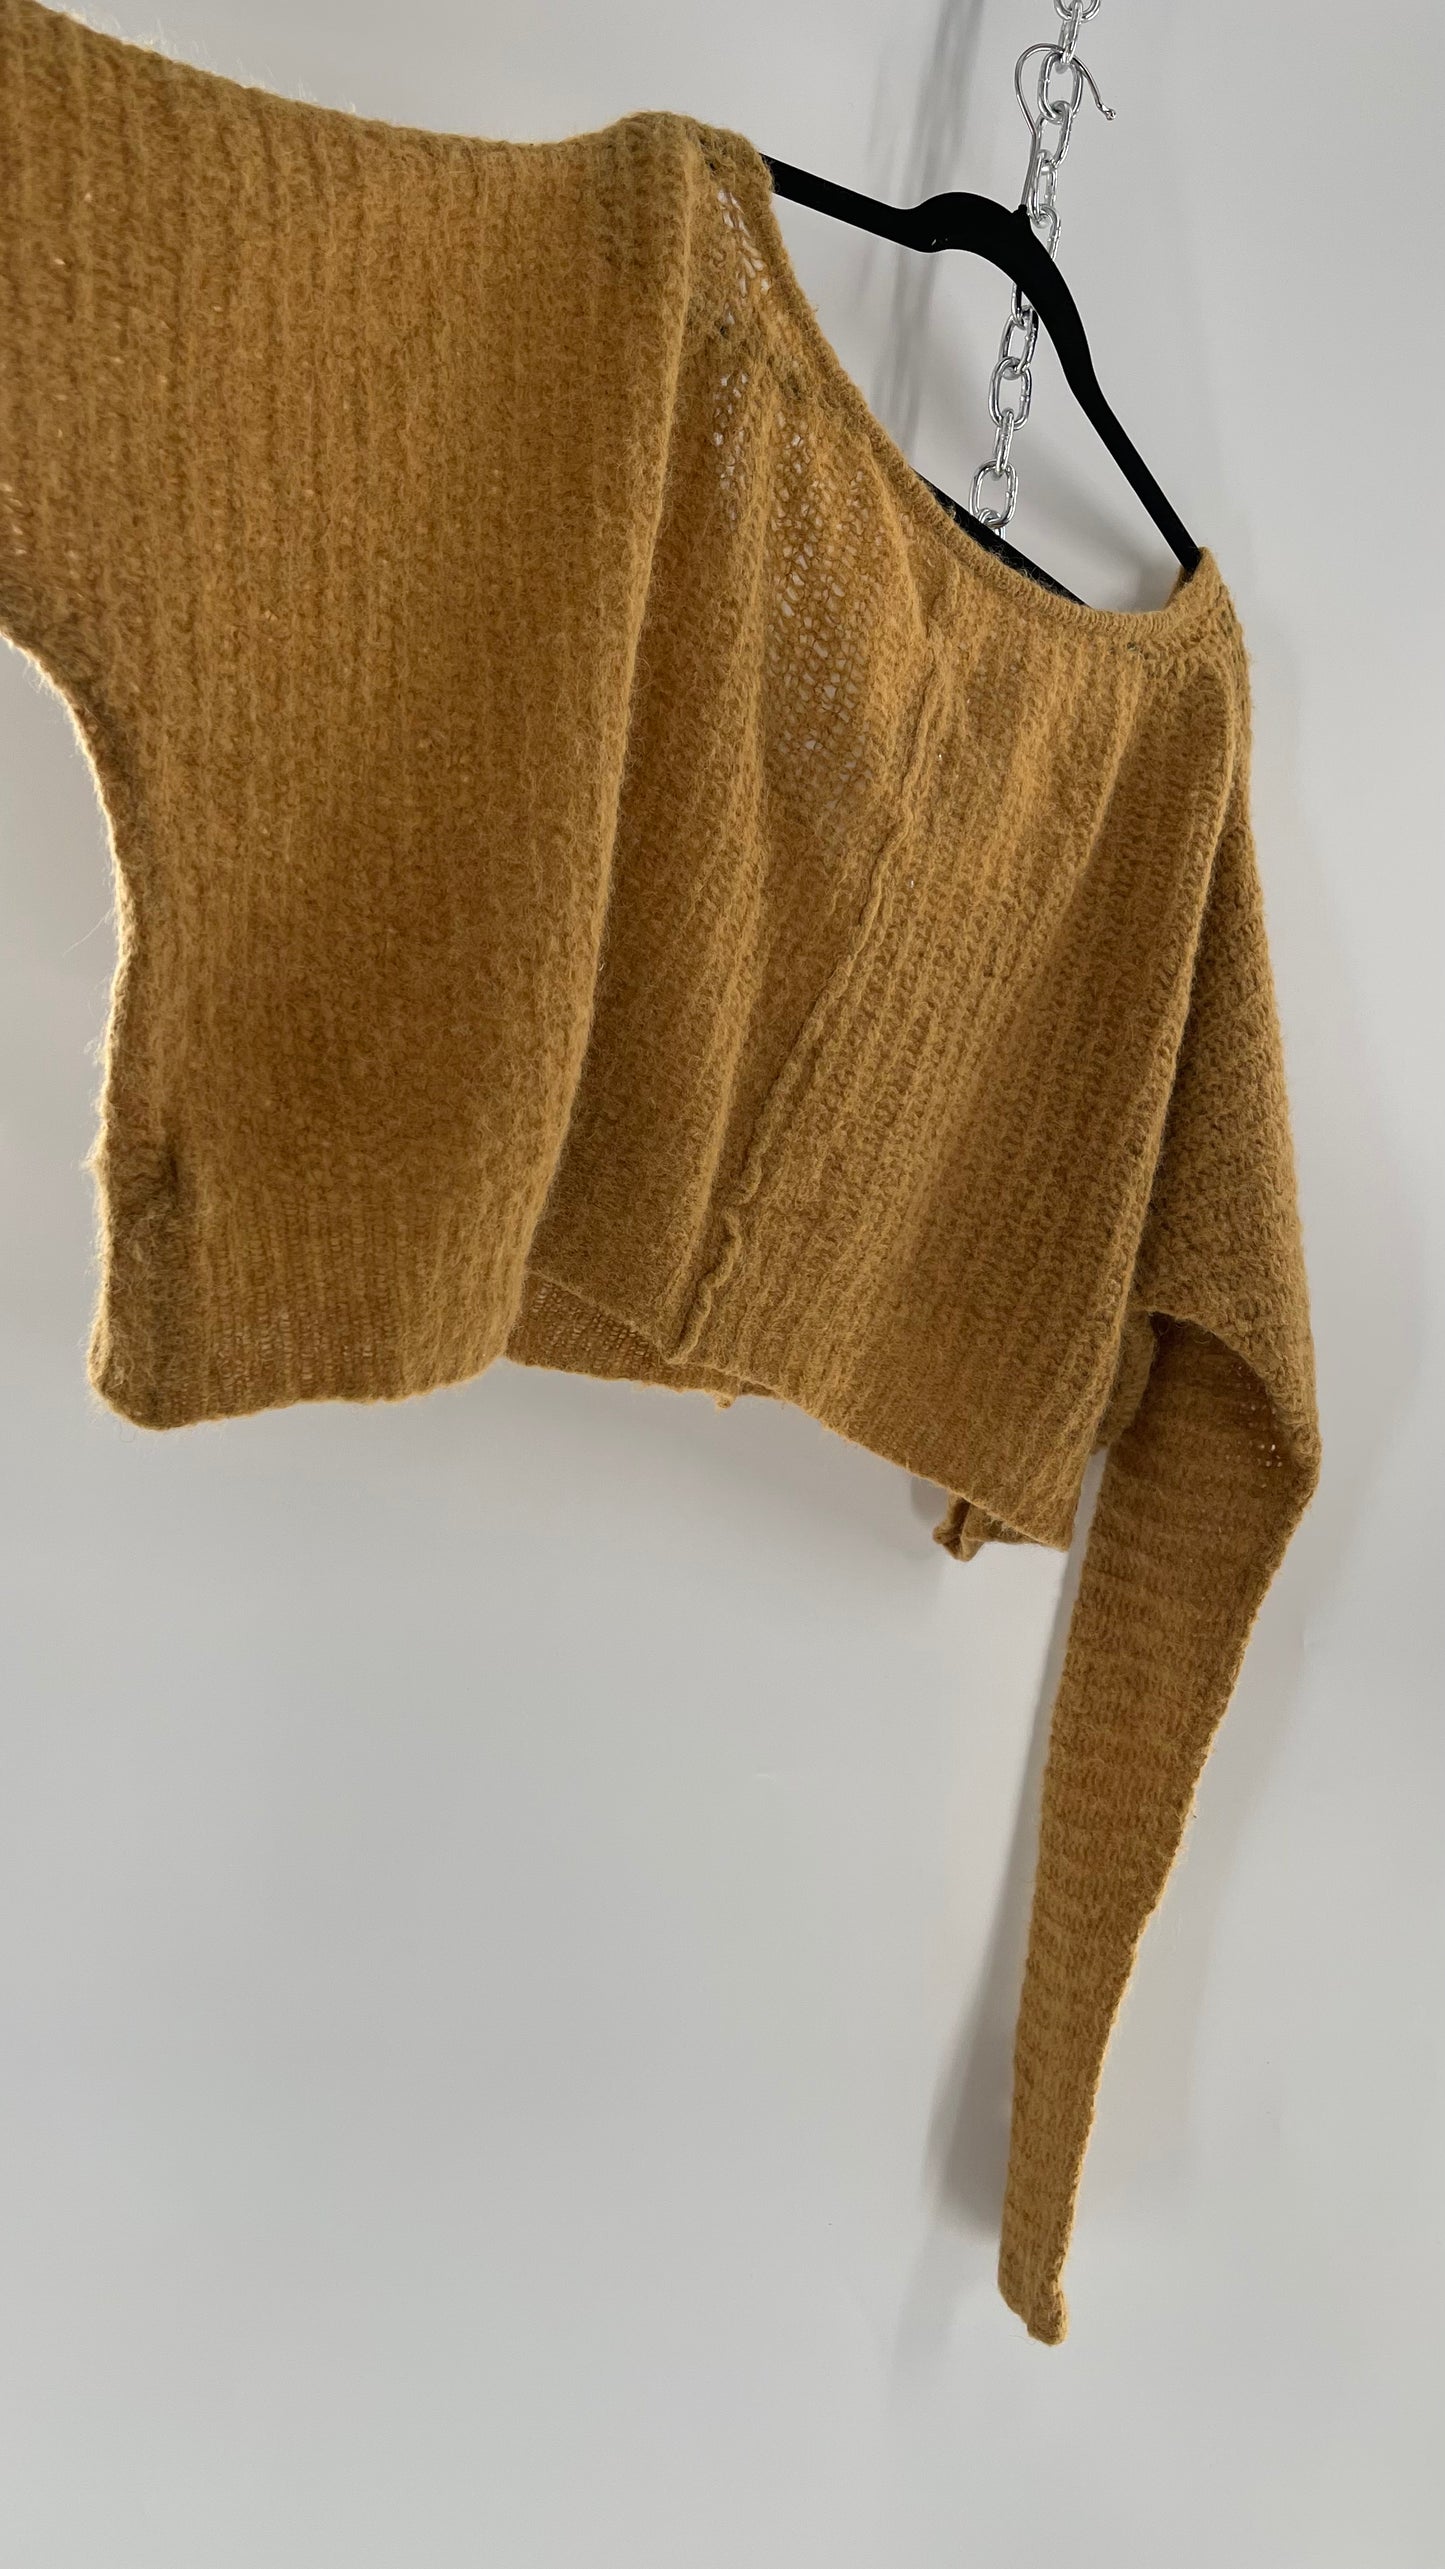 Free People Mustard Knit Cropped Sweater (XS) 88% Alpaca Fur